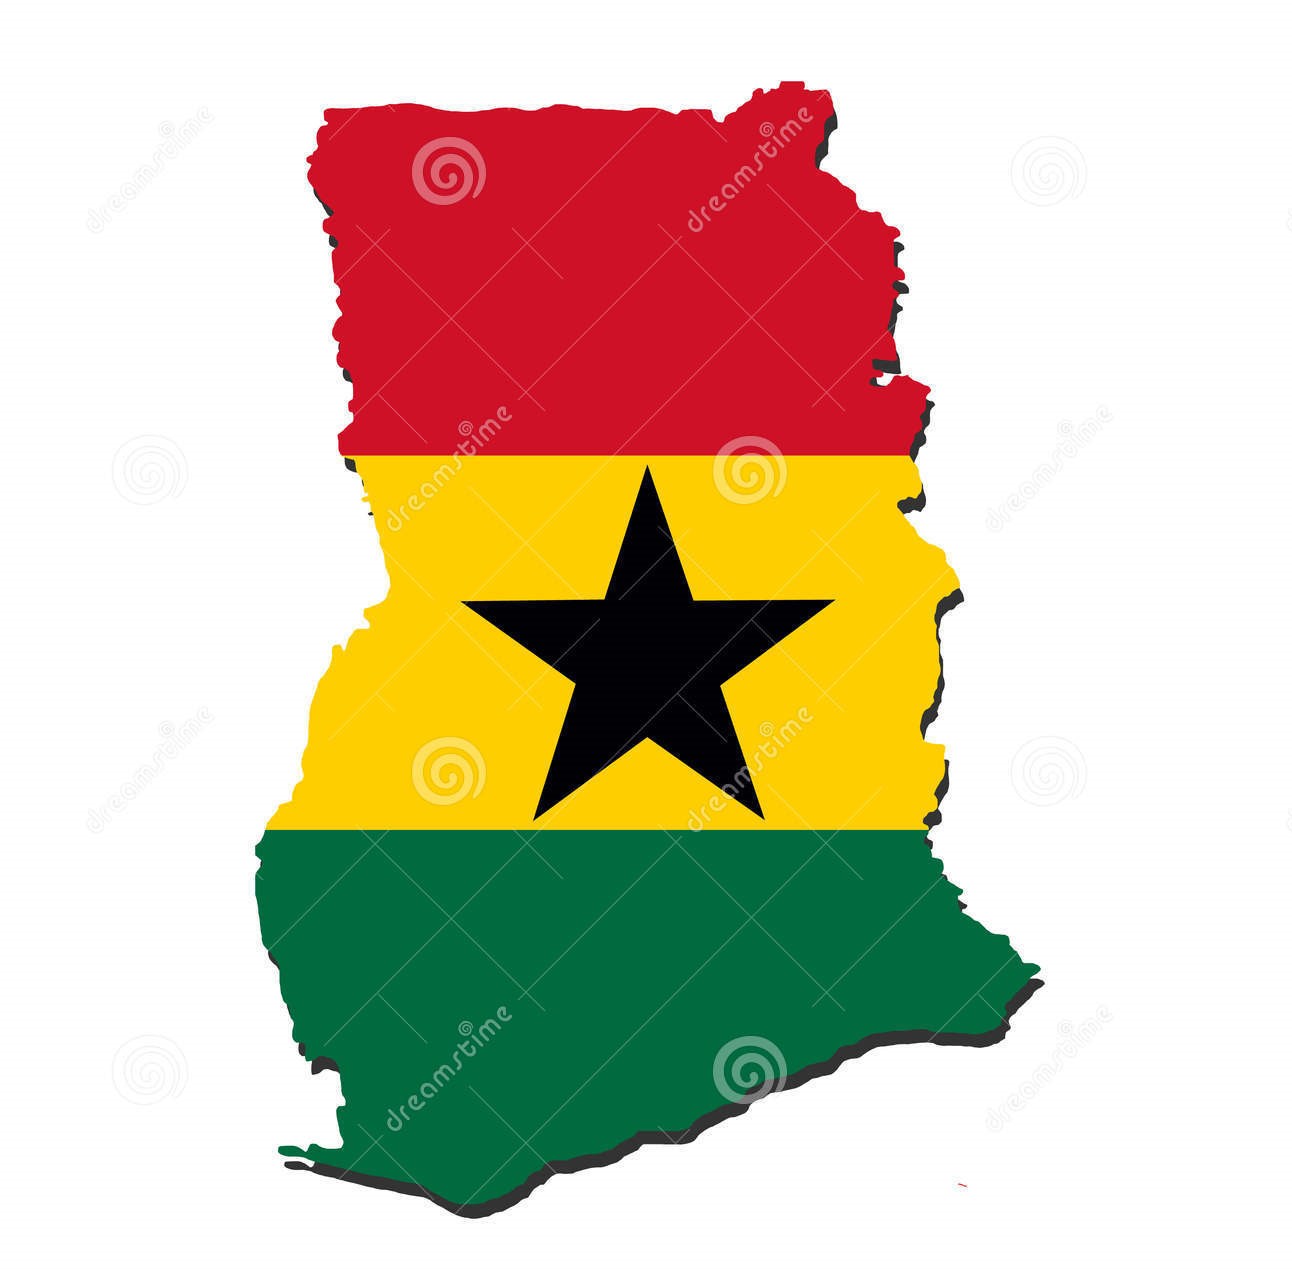 trademark attorney in Ghana trademark registration Ghana intellectual property